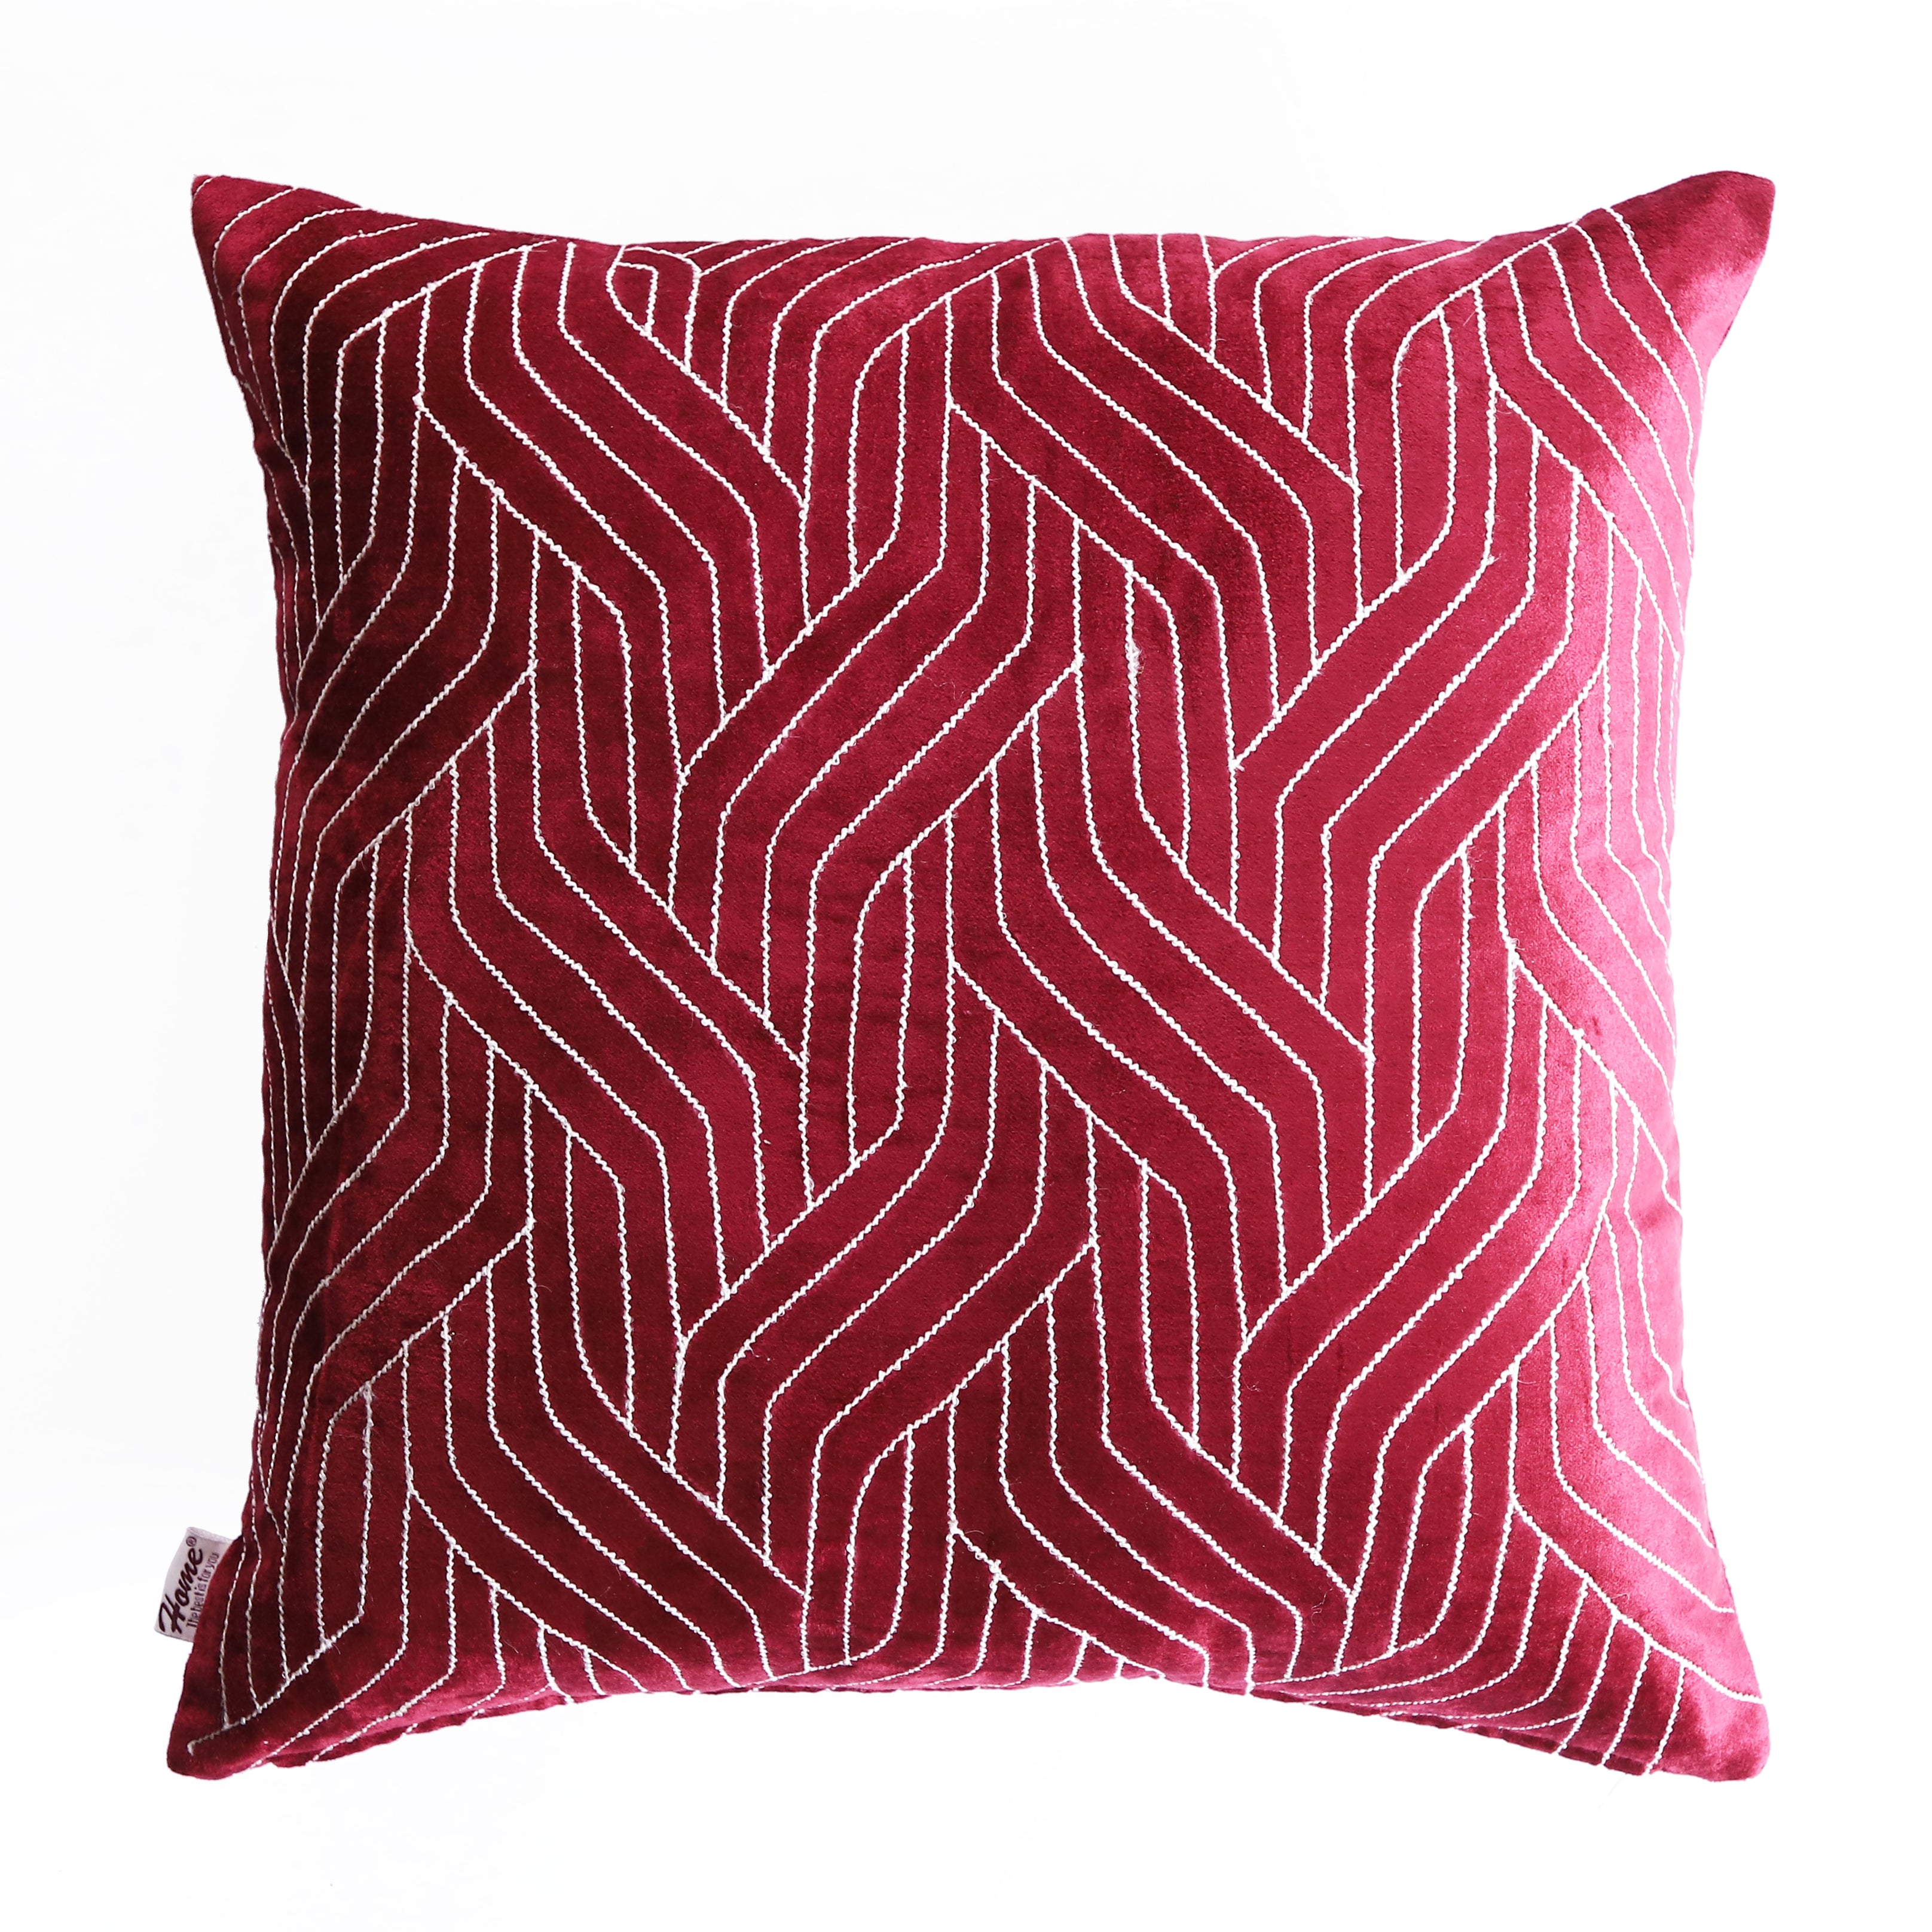 Petal Bliss Interlace Stripes Design 18x18 Inch Cushion Cover